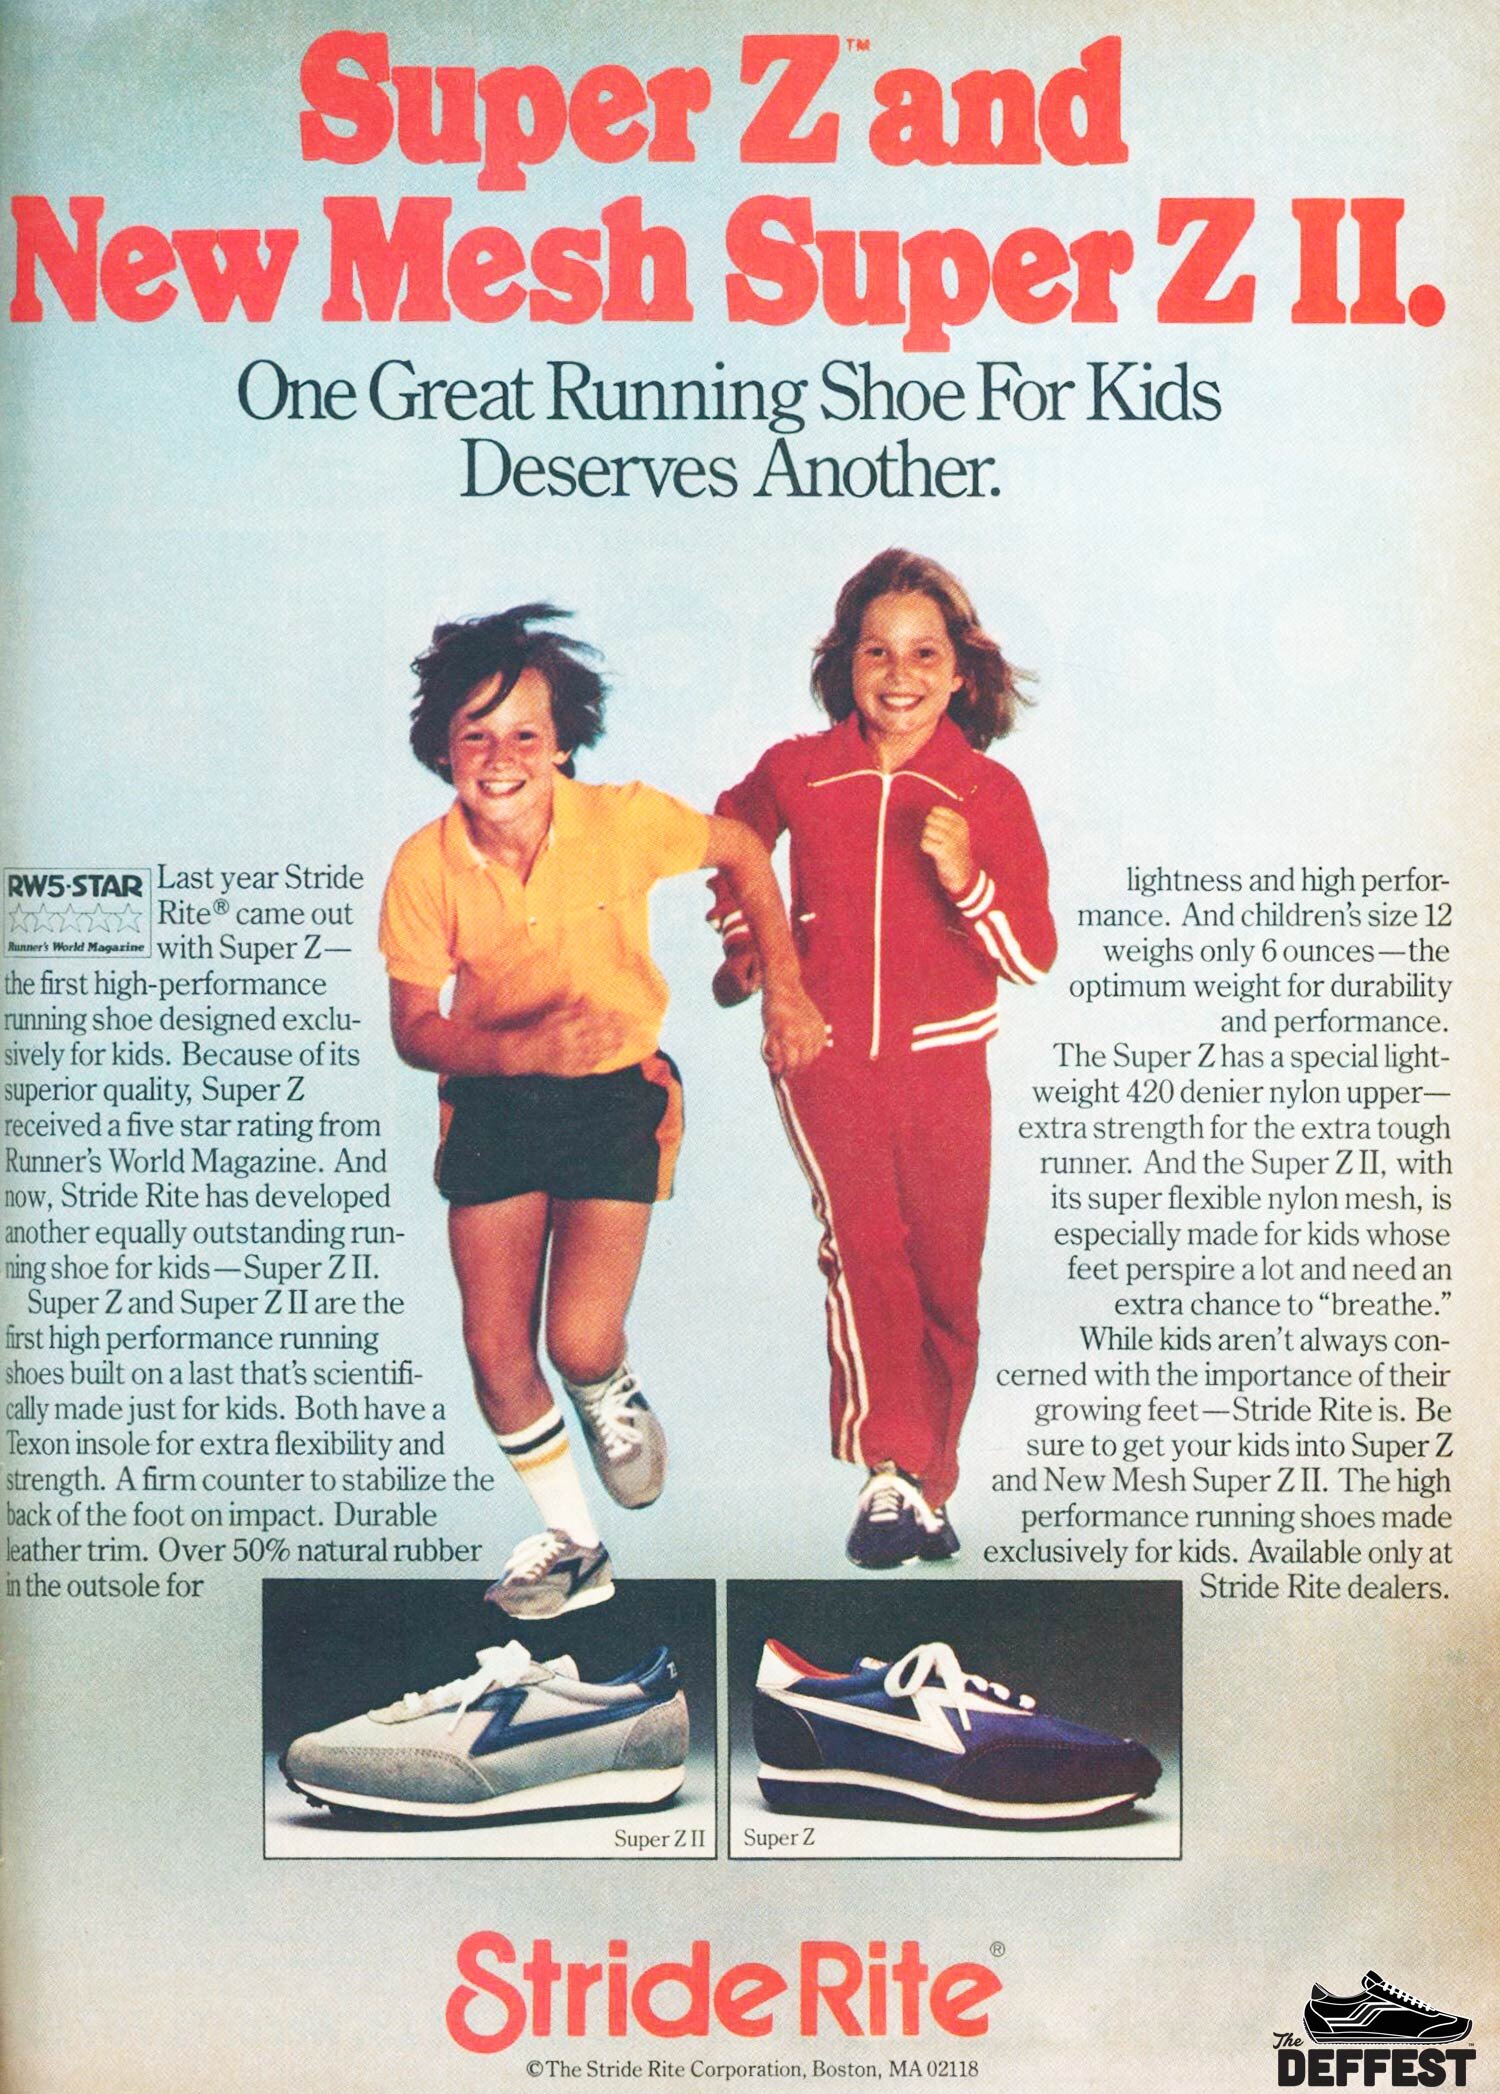 The Deffest®. A vintage and retro sneaker blog. — Vintage Ads